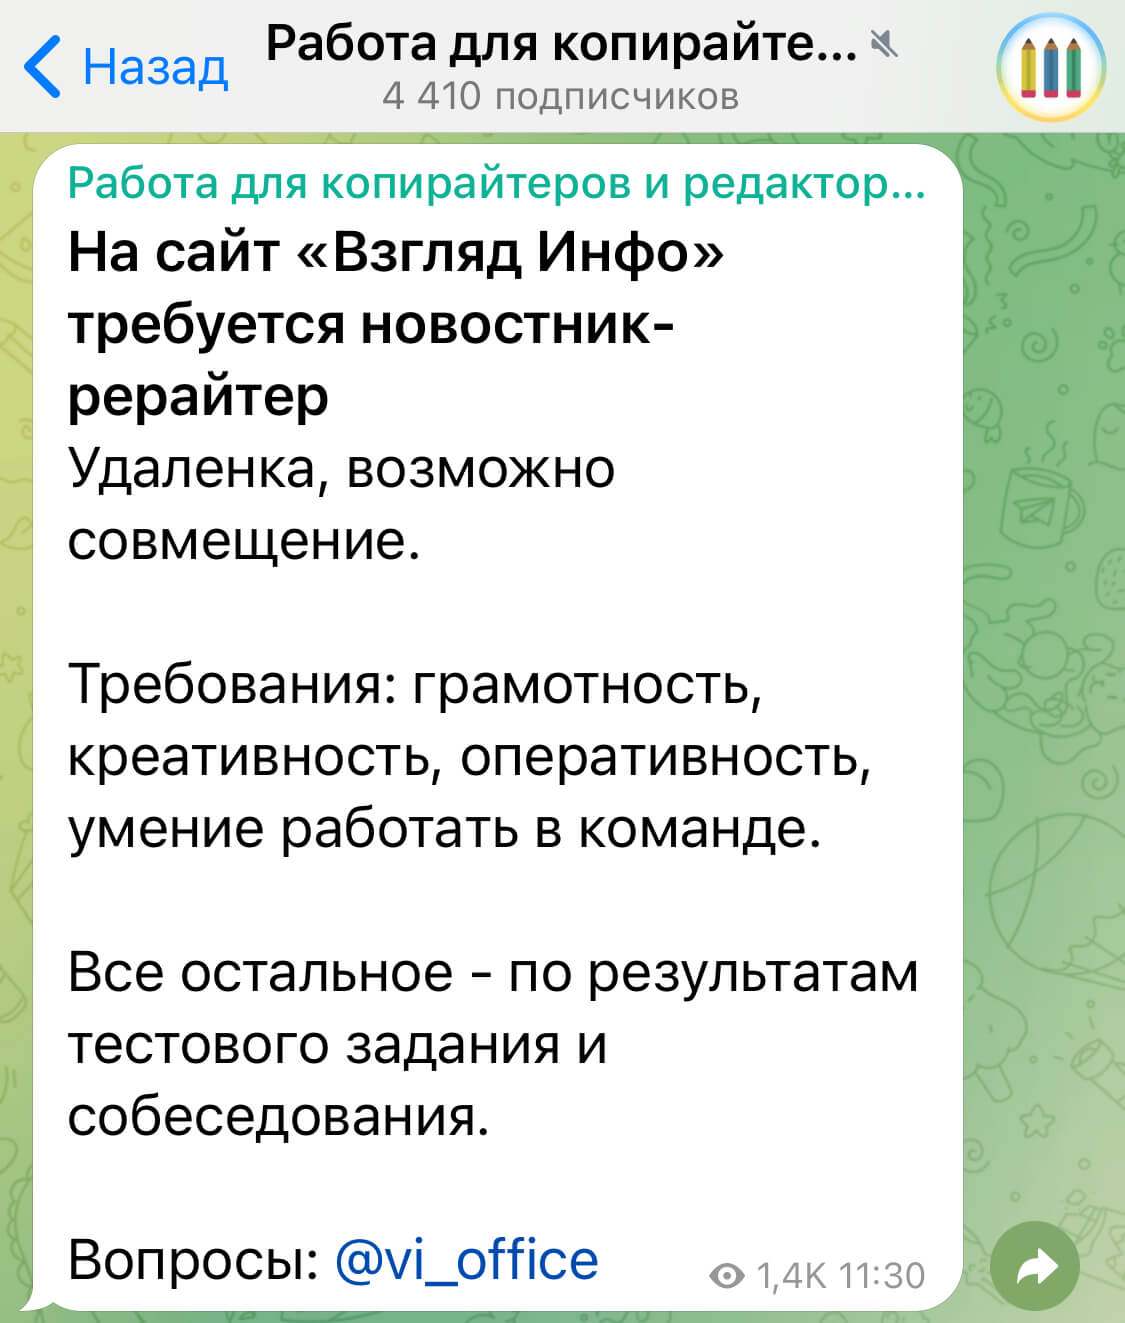 вакансия в Telegram